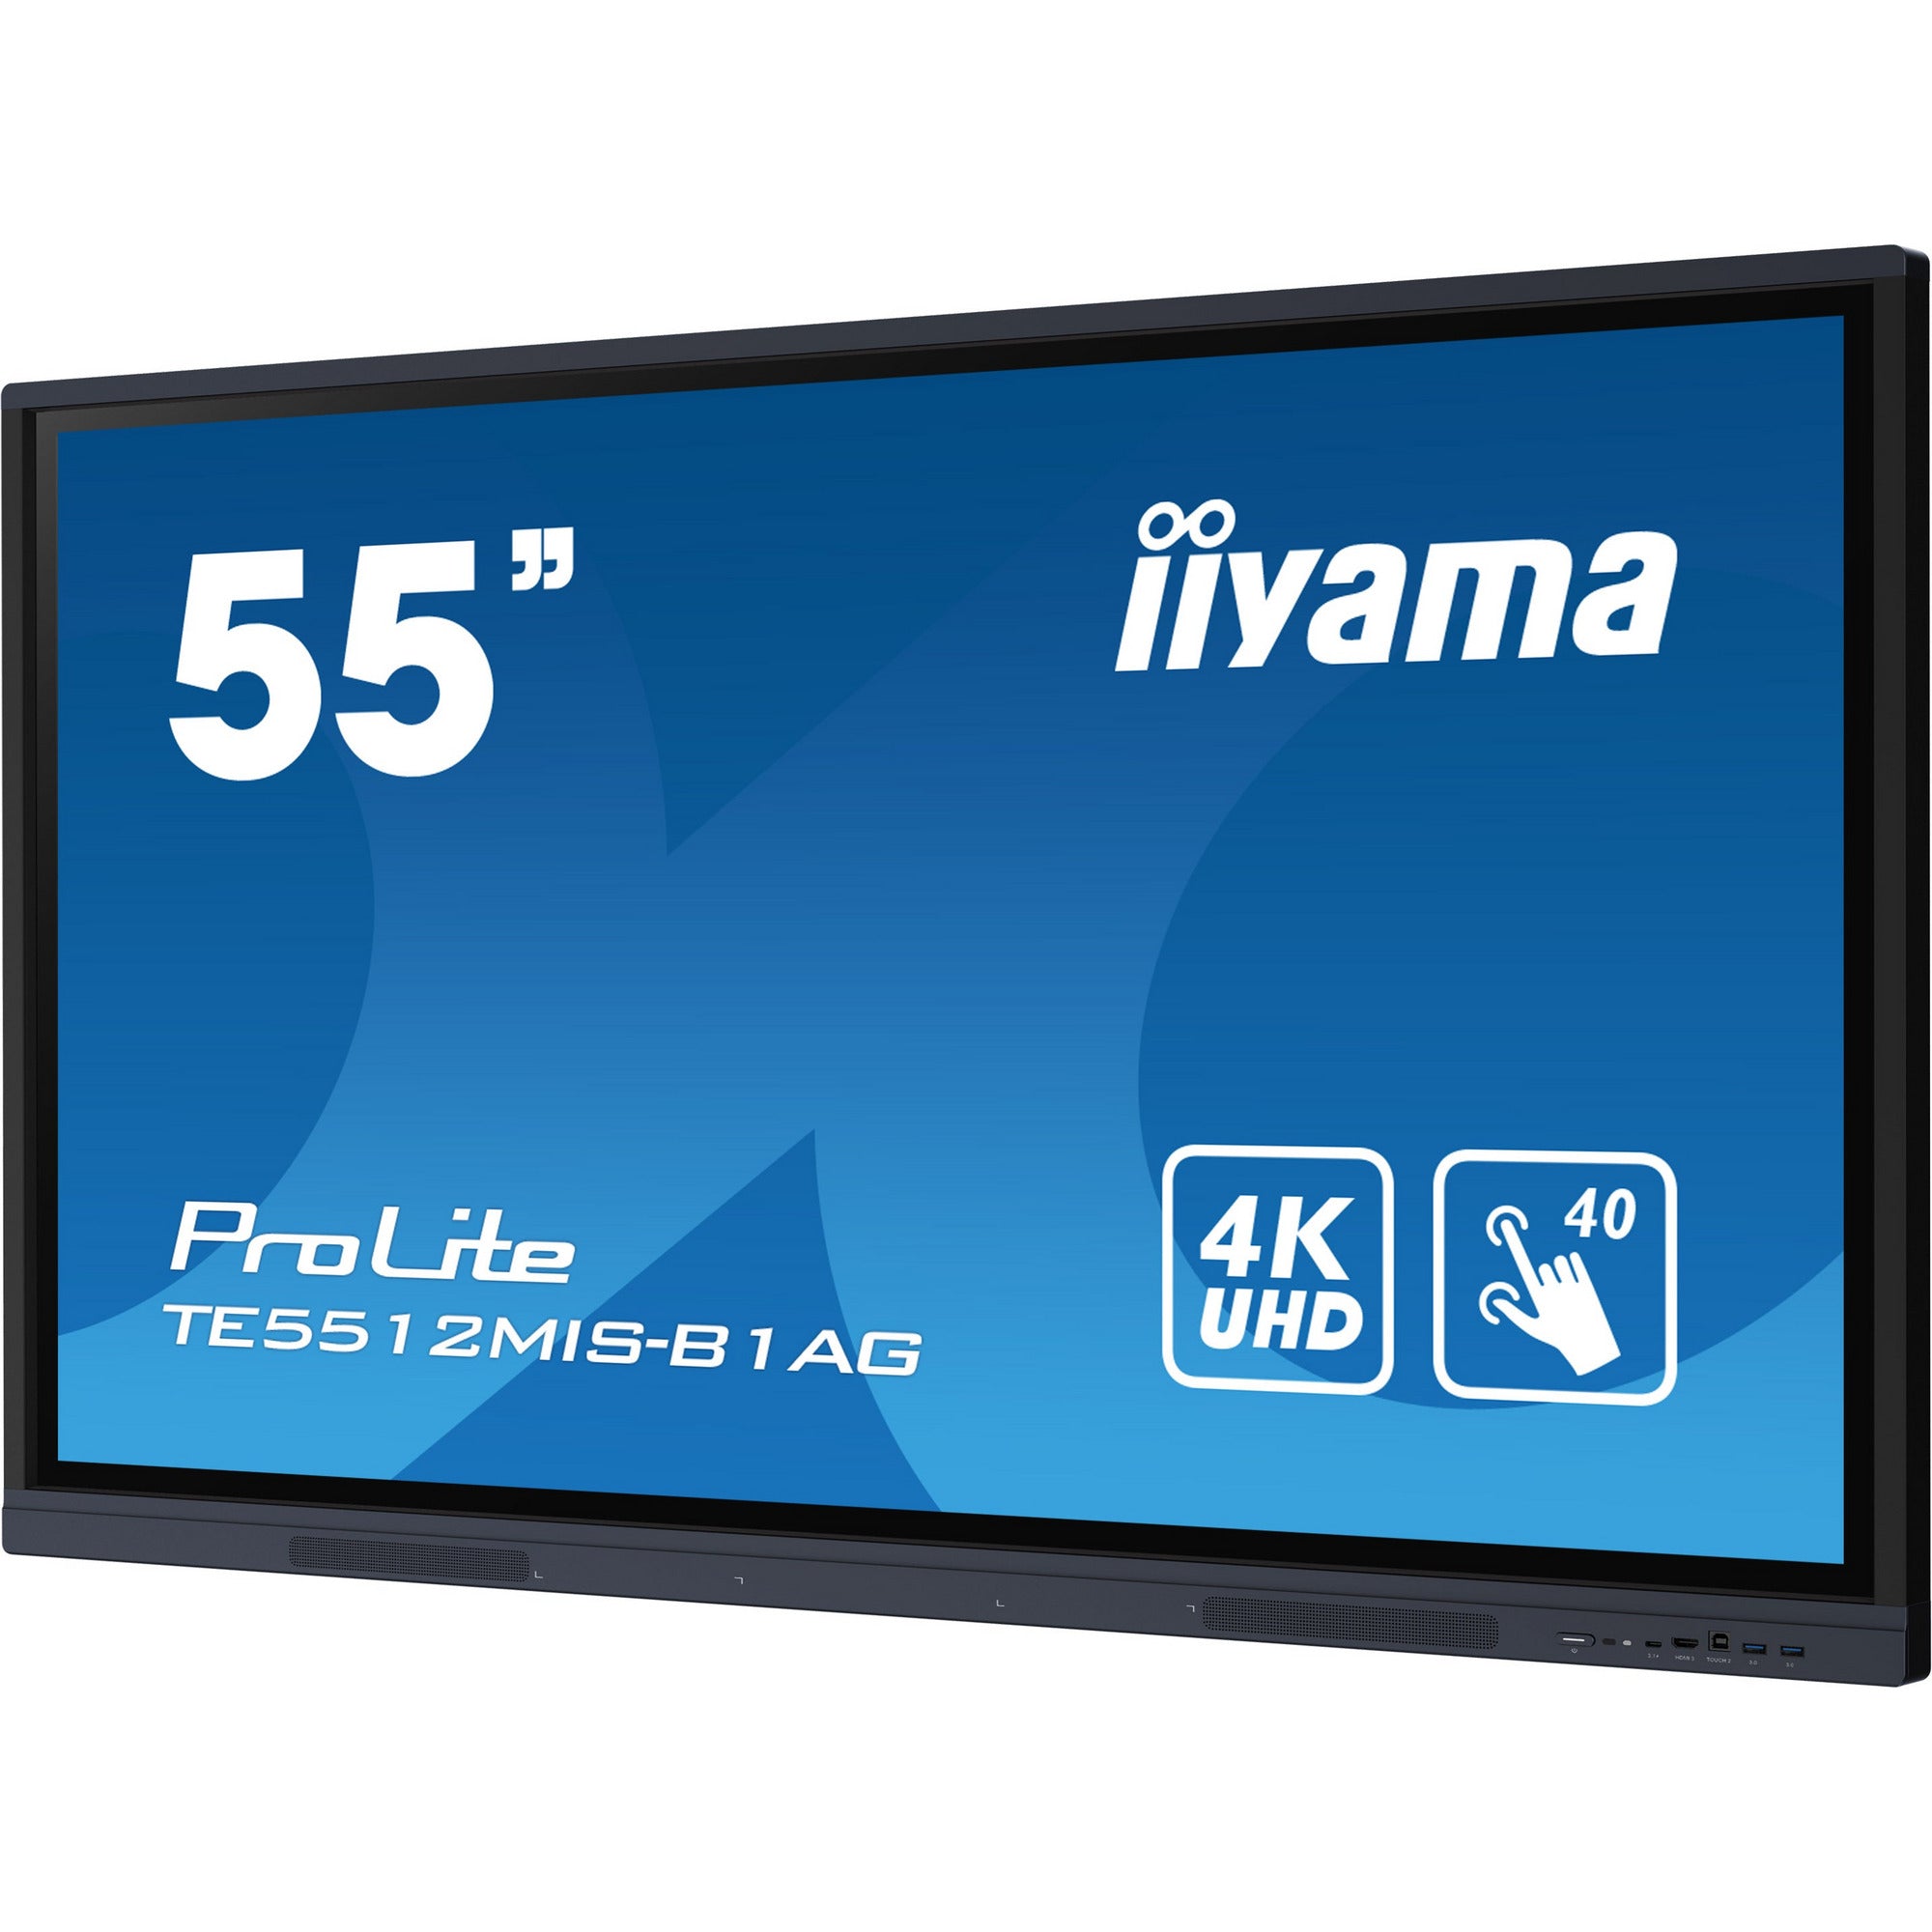 Iiyama ProLite TE5512MIS-B1AG 55" Interactive 4K UHD Touchscreen with User Profiles